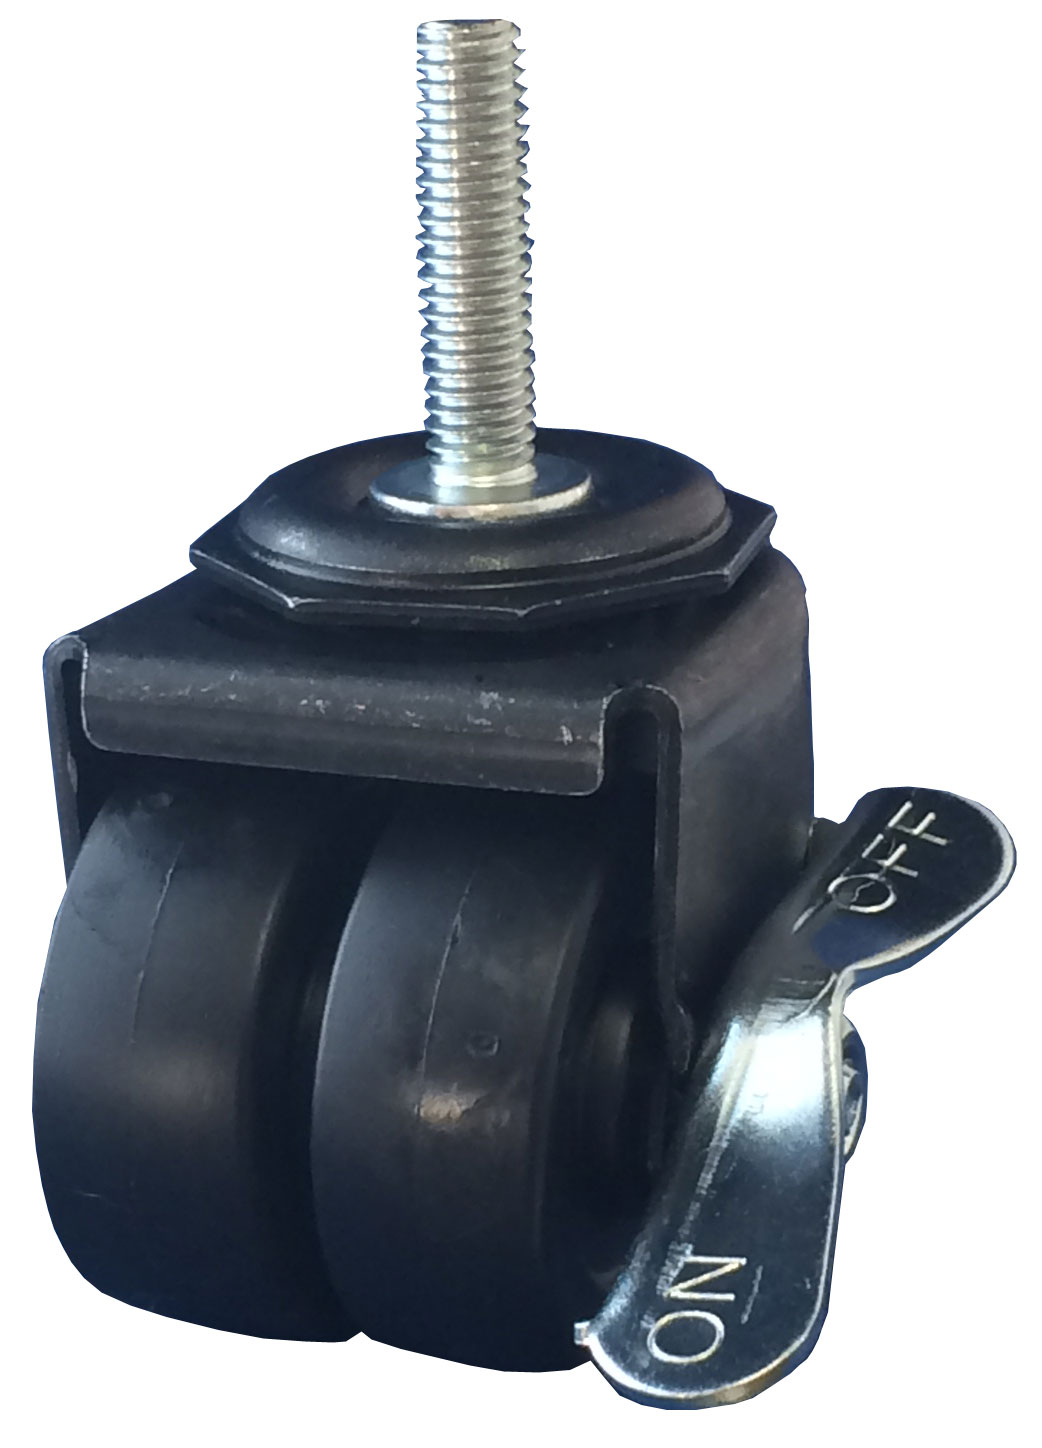 Caster; Dual Wheel; Swivel; 2" x 7/8" (x2); Polyolefin; Threaded Stem (3/8"-16TPI x 1-1/2"); Black Rig; Plain bore; 225#; Side friction brake (Item #65731)